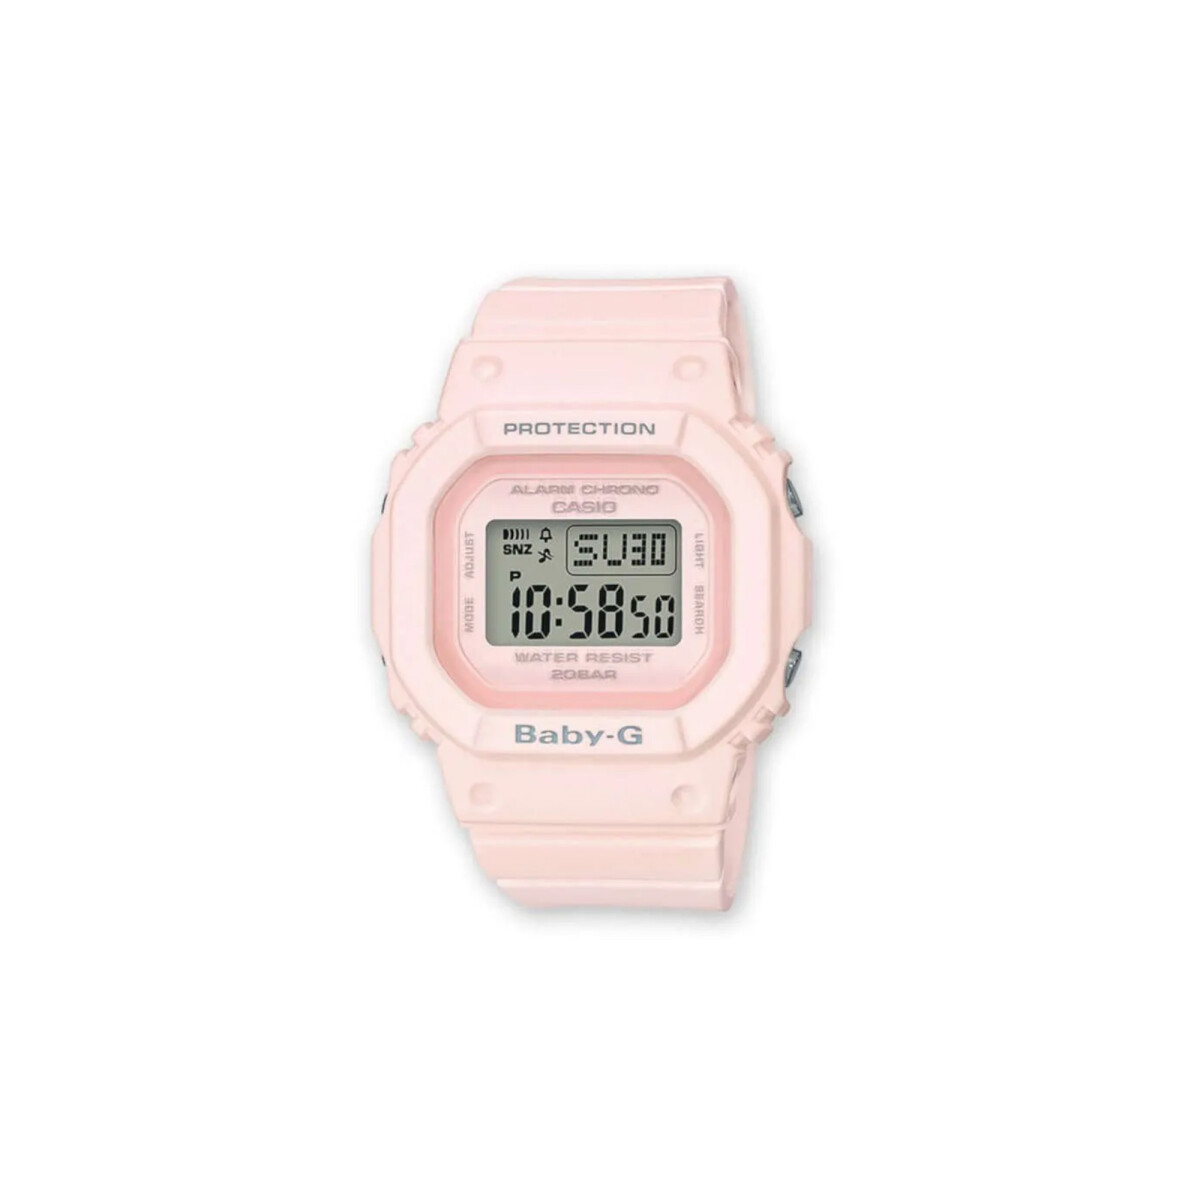 Reloj Casio Baby-G Protection Rosa 